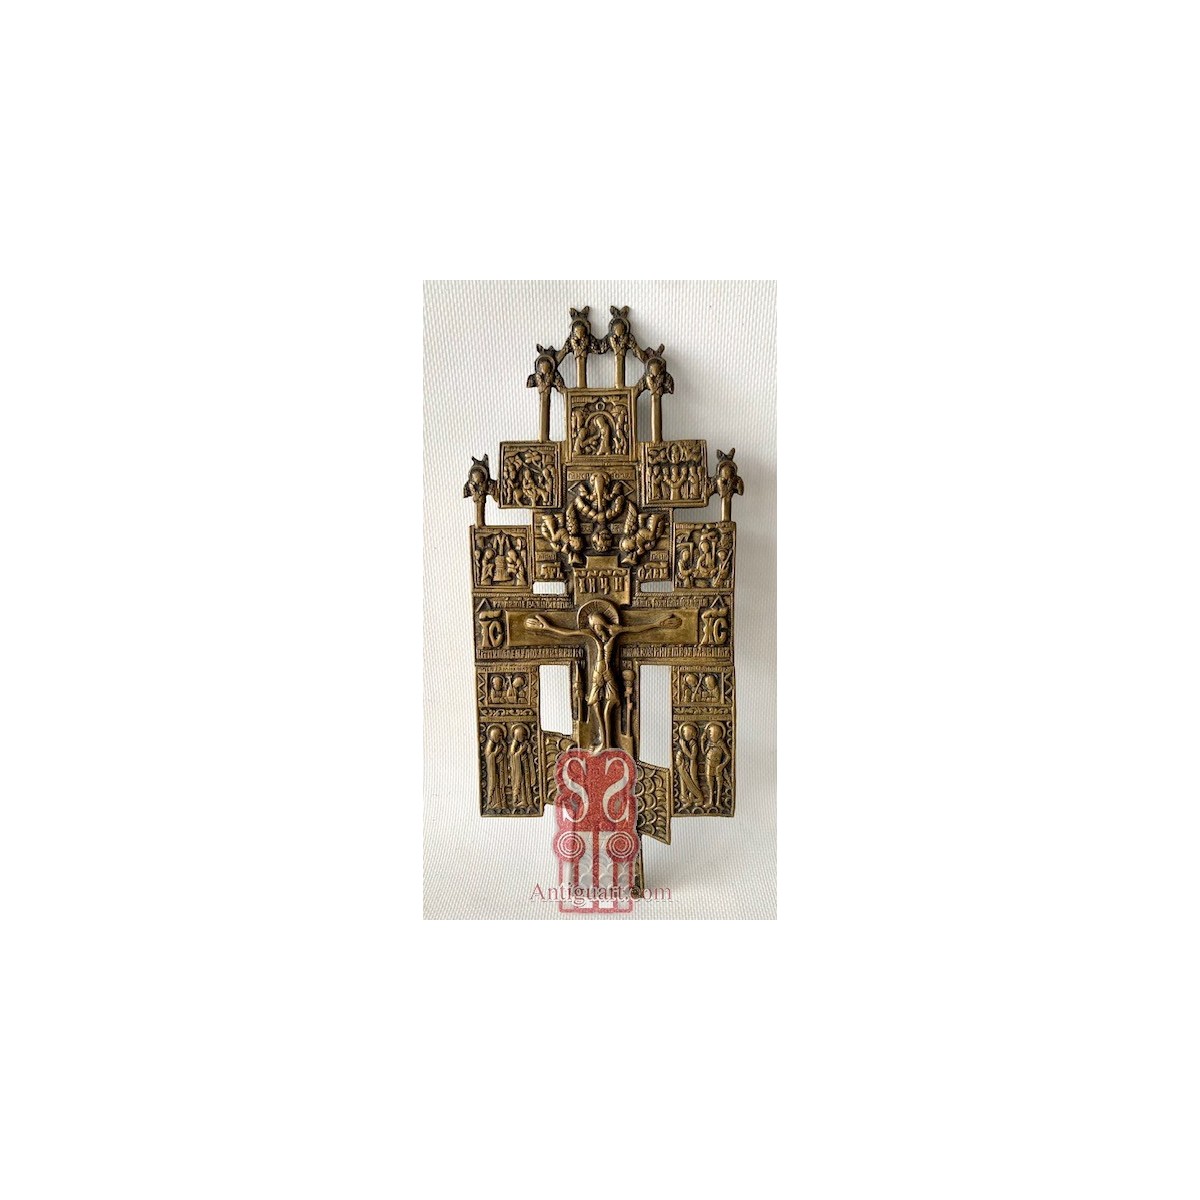 Orthodox bronze crucifix, Russia,  19th